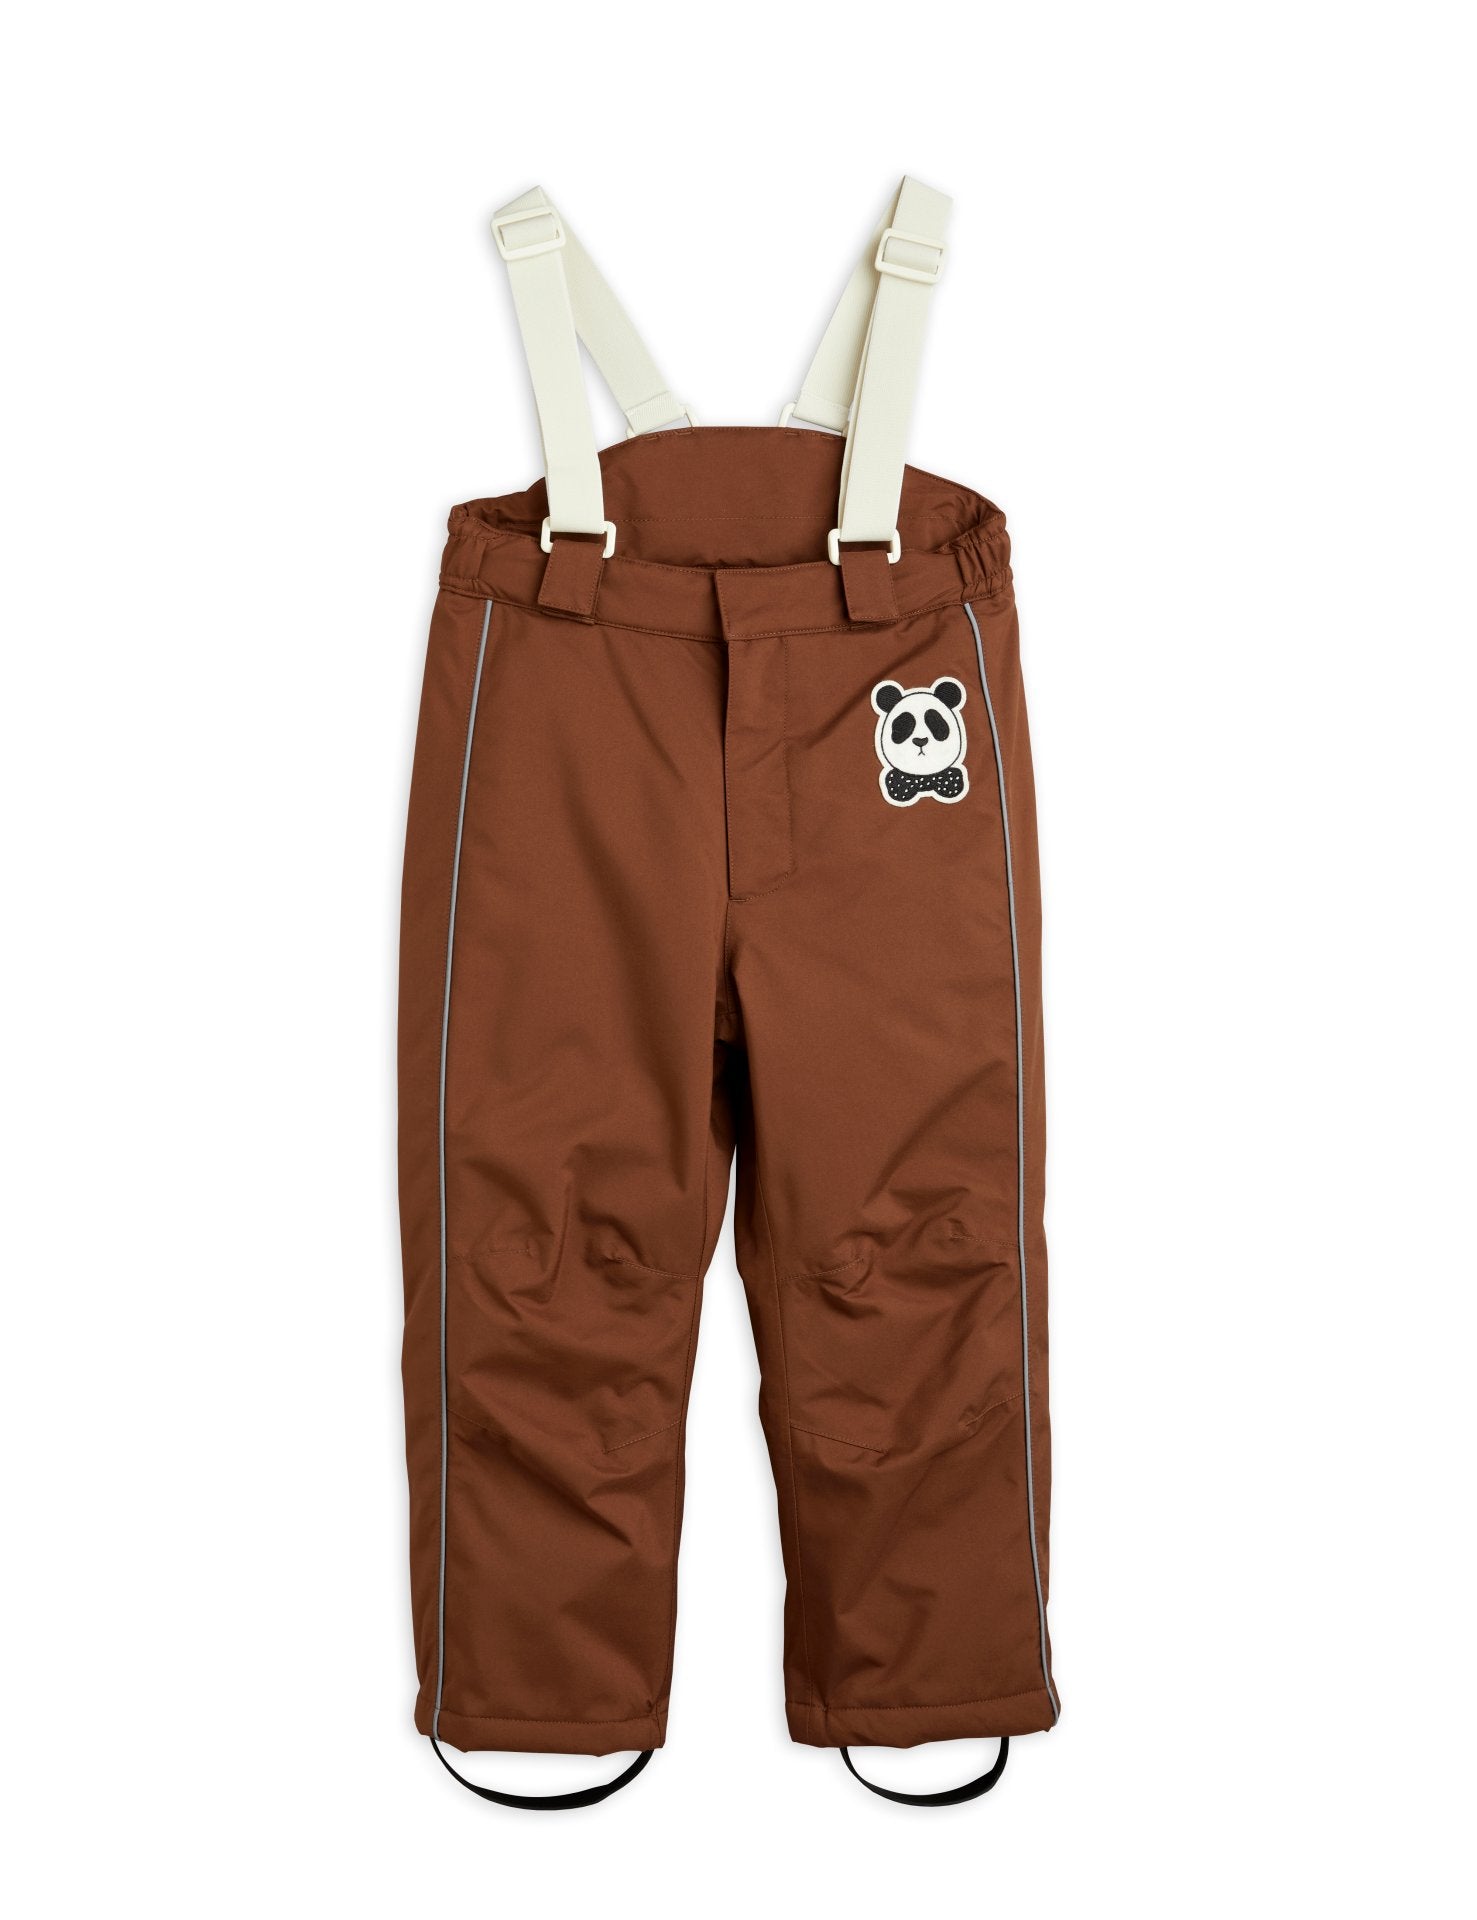 Panda soft ski trousers